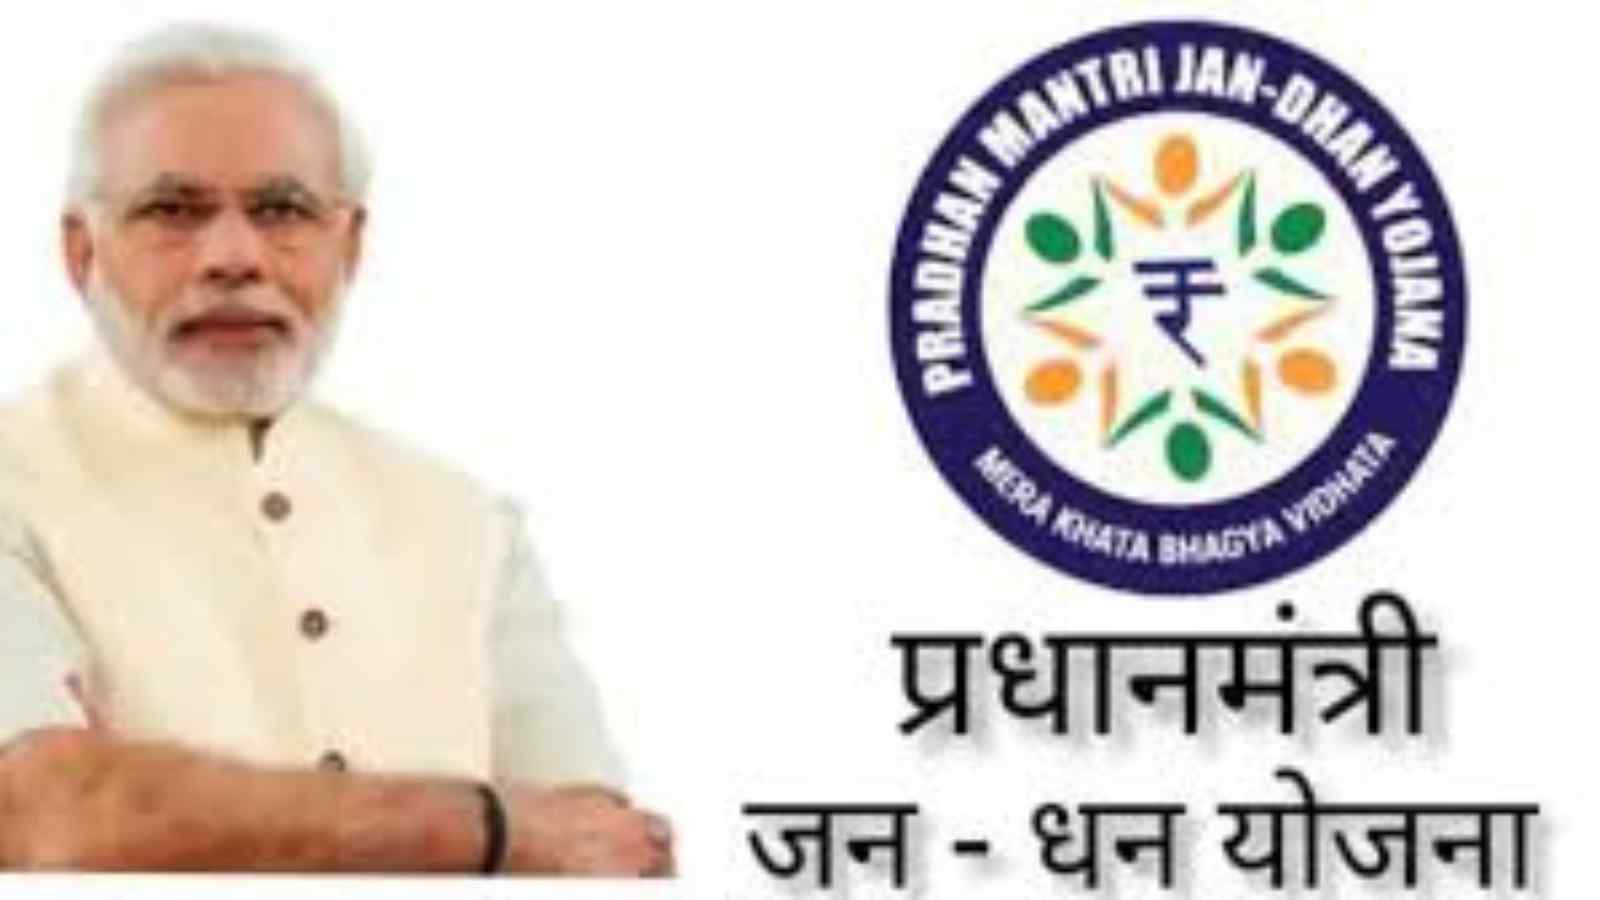 Pradhan Mantri Jan Dhan Yojana: Completes nine years of successful implementation